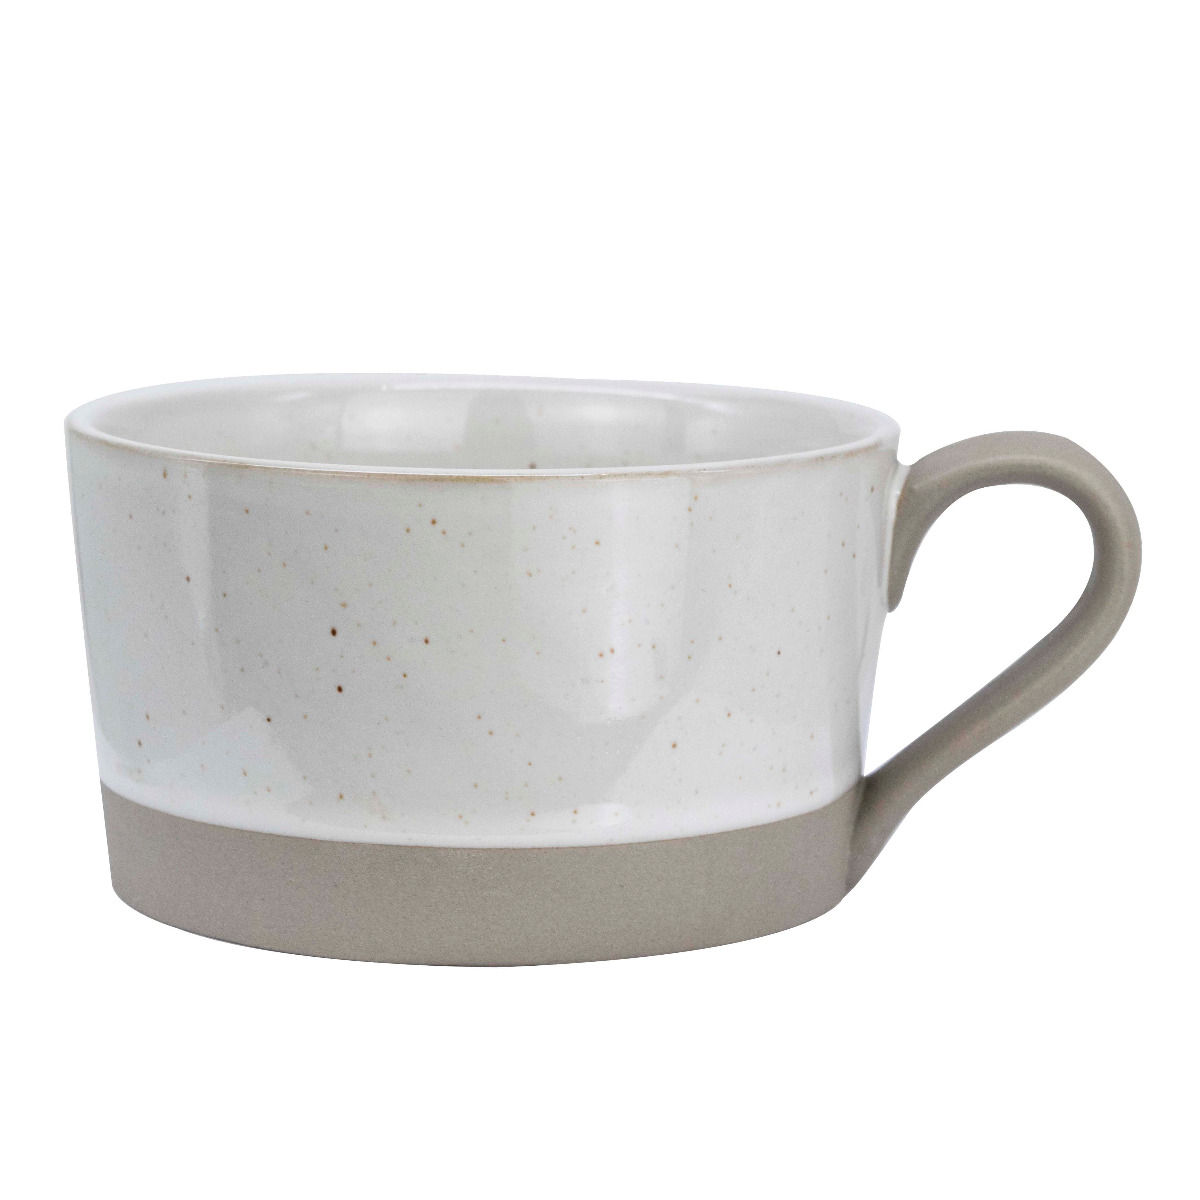 Coffee ceramic bowl e-338 white